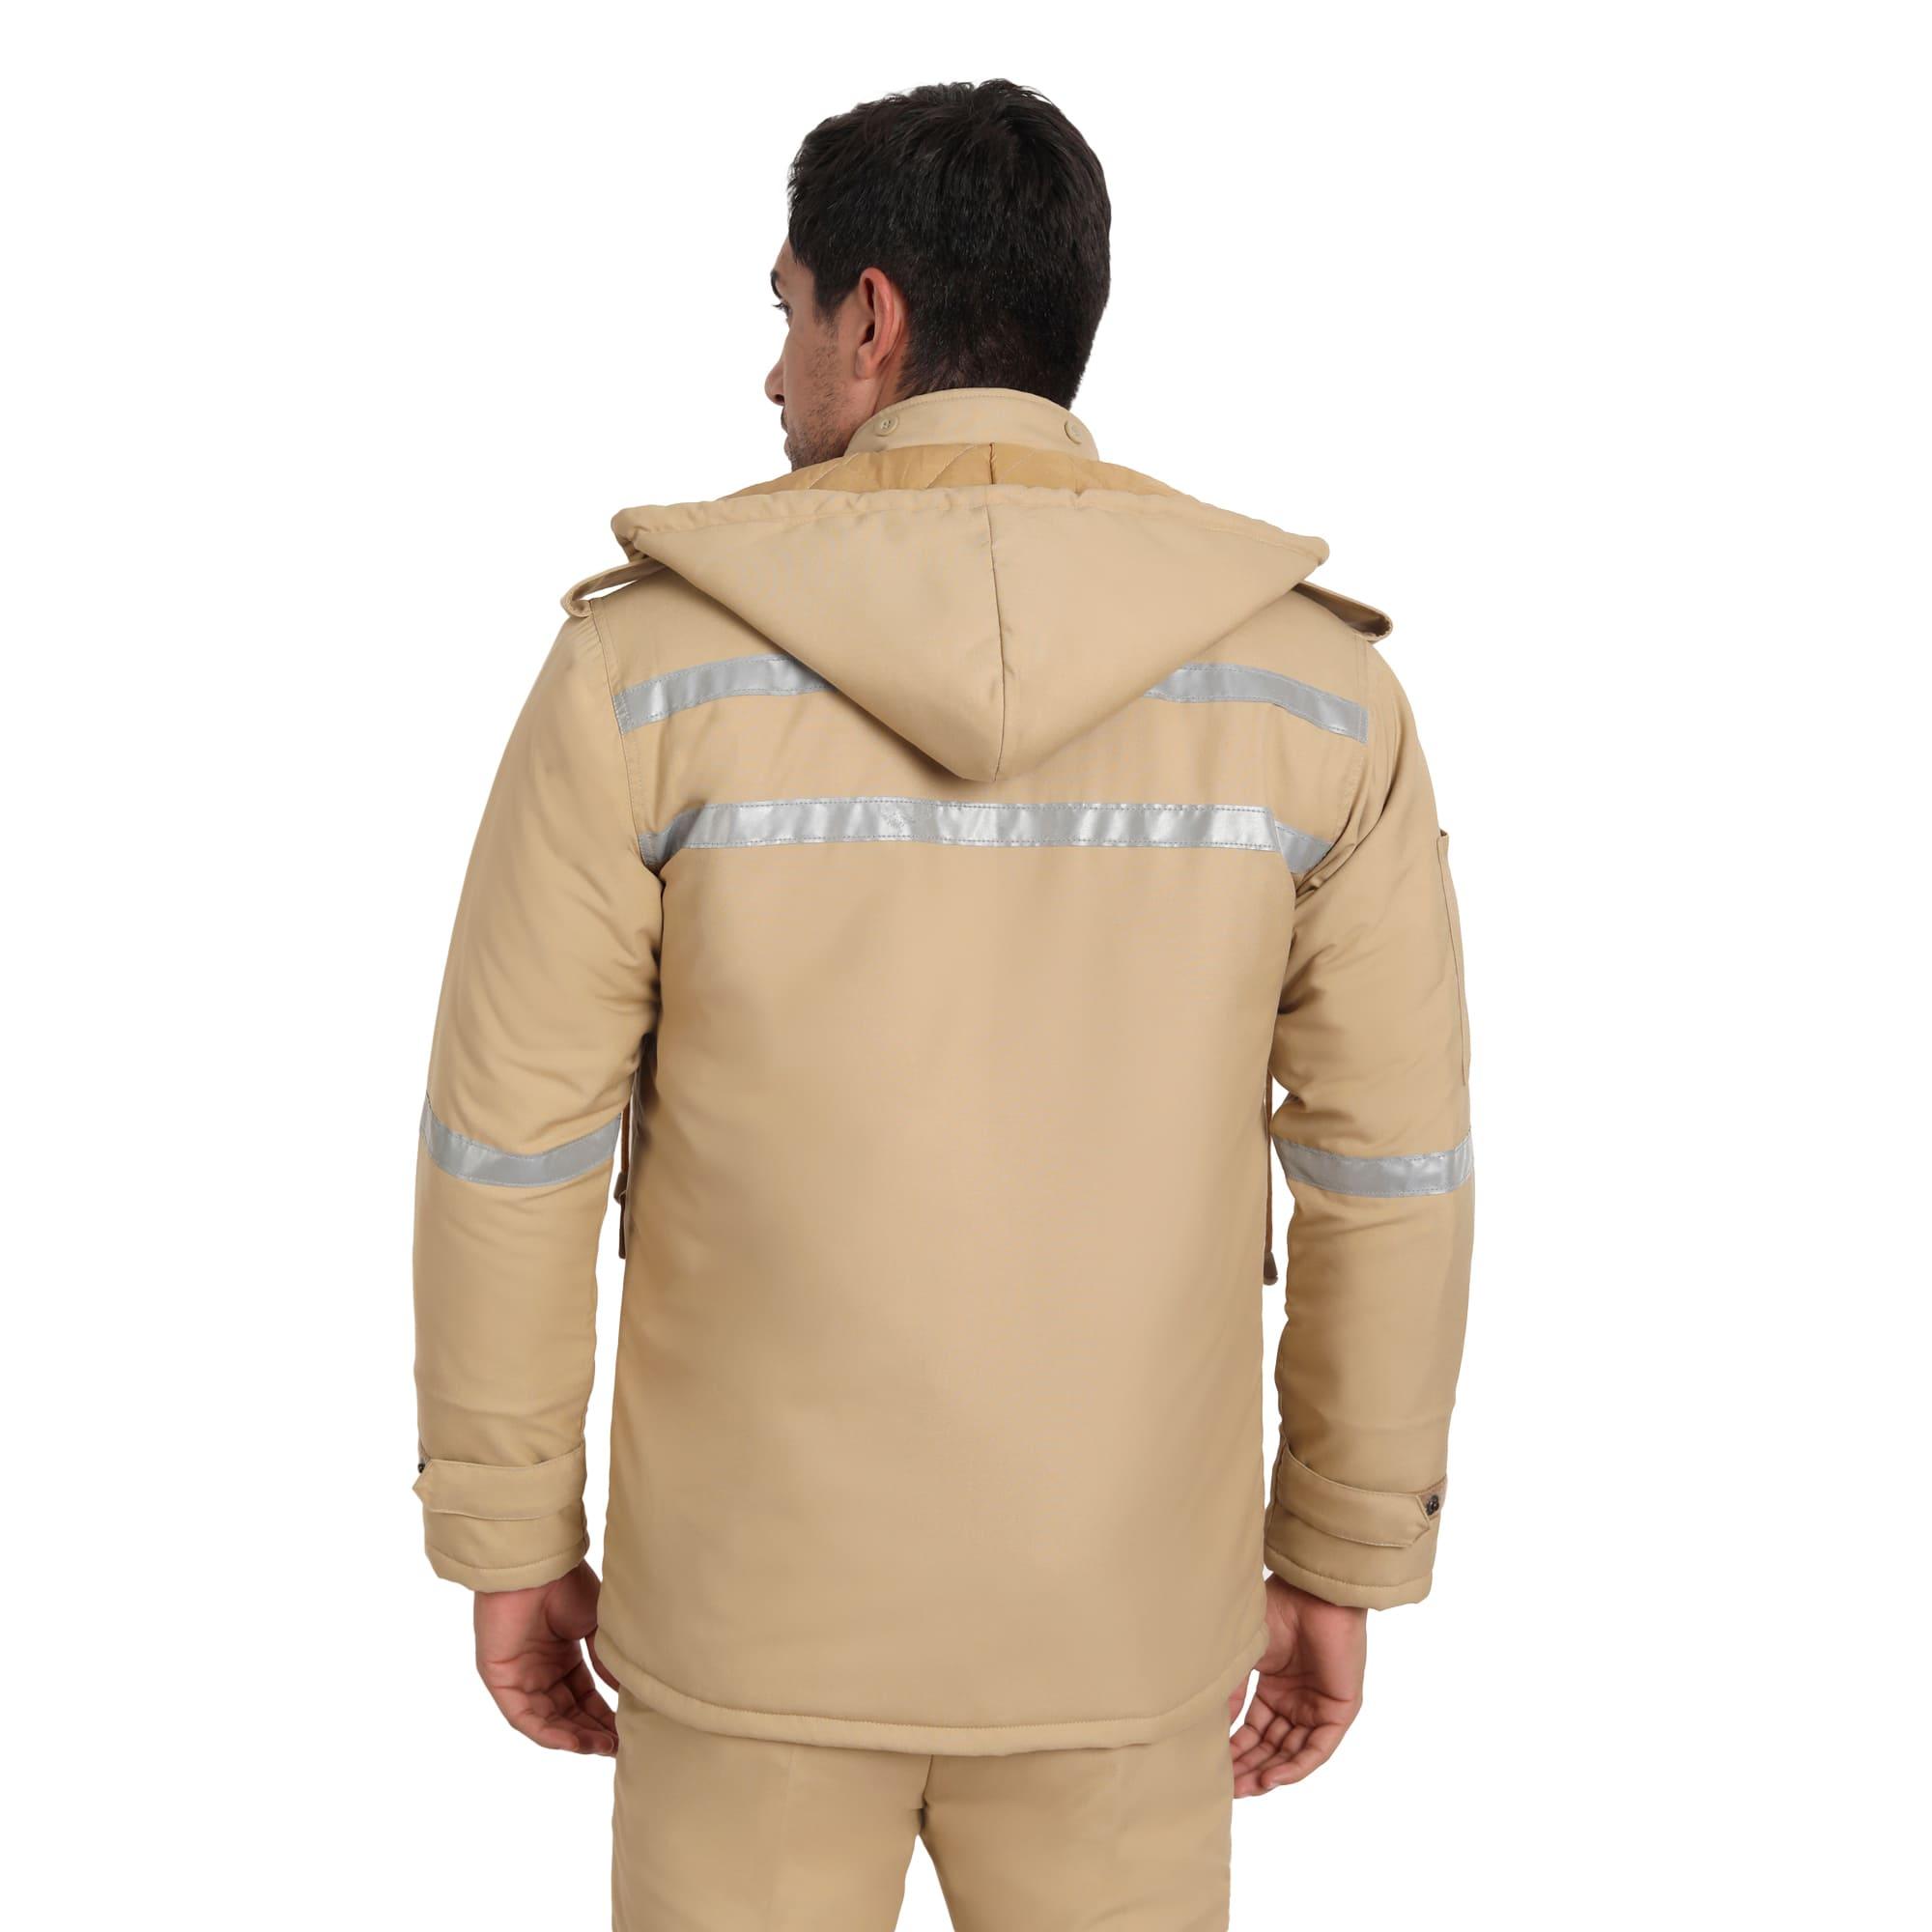 Khaki Police Jacket Full Sleeves uniformer 533